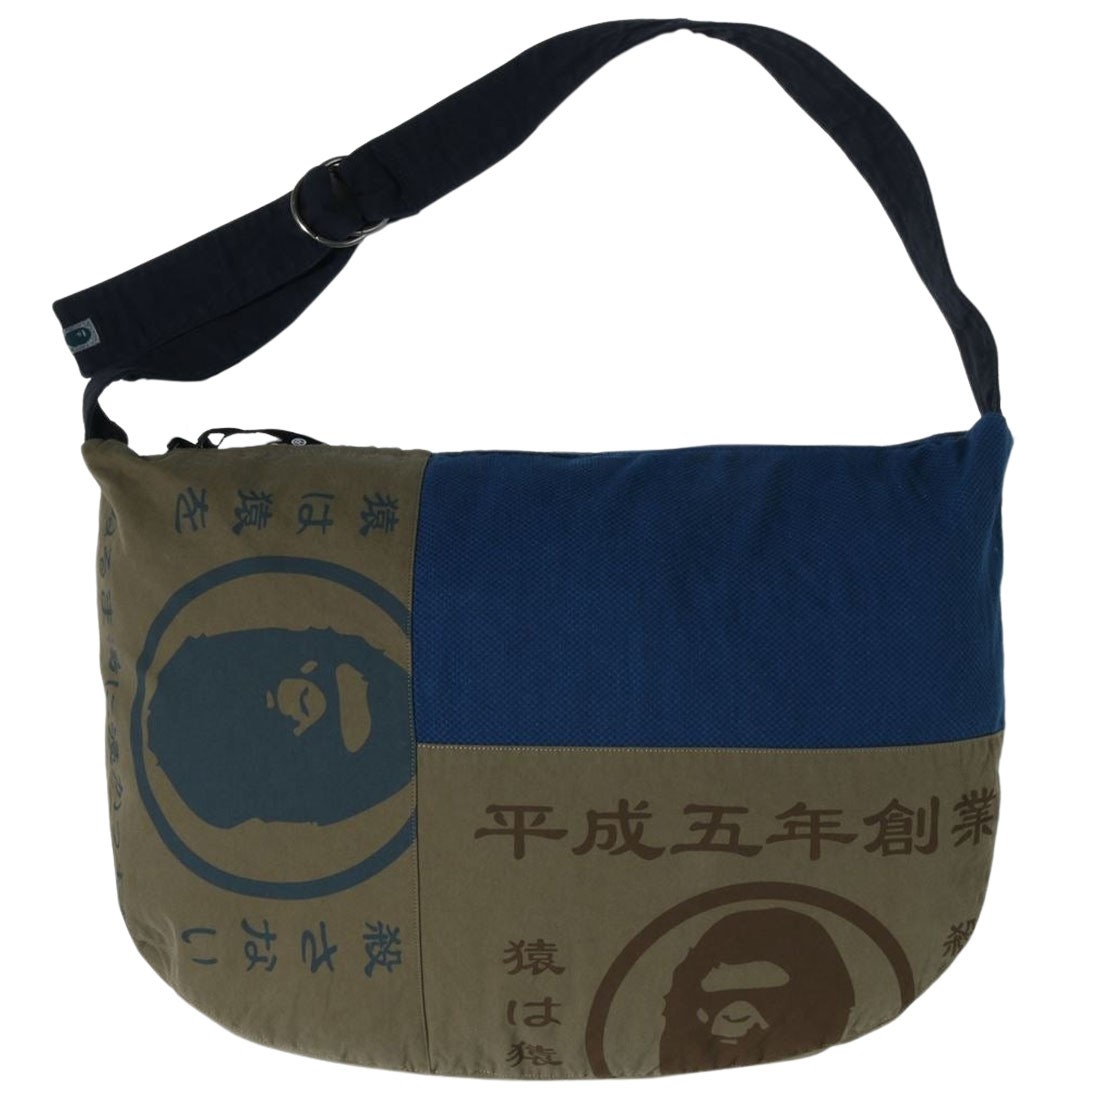 A Bathing Ape Japan Graphic Furoshiki Bag (multi)